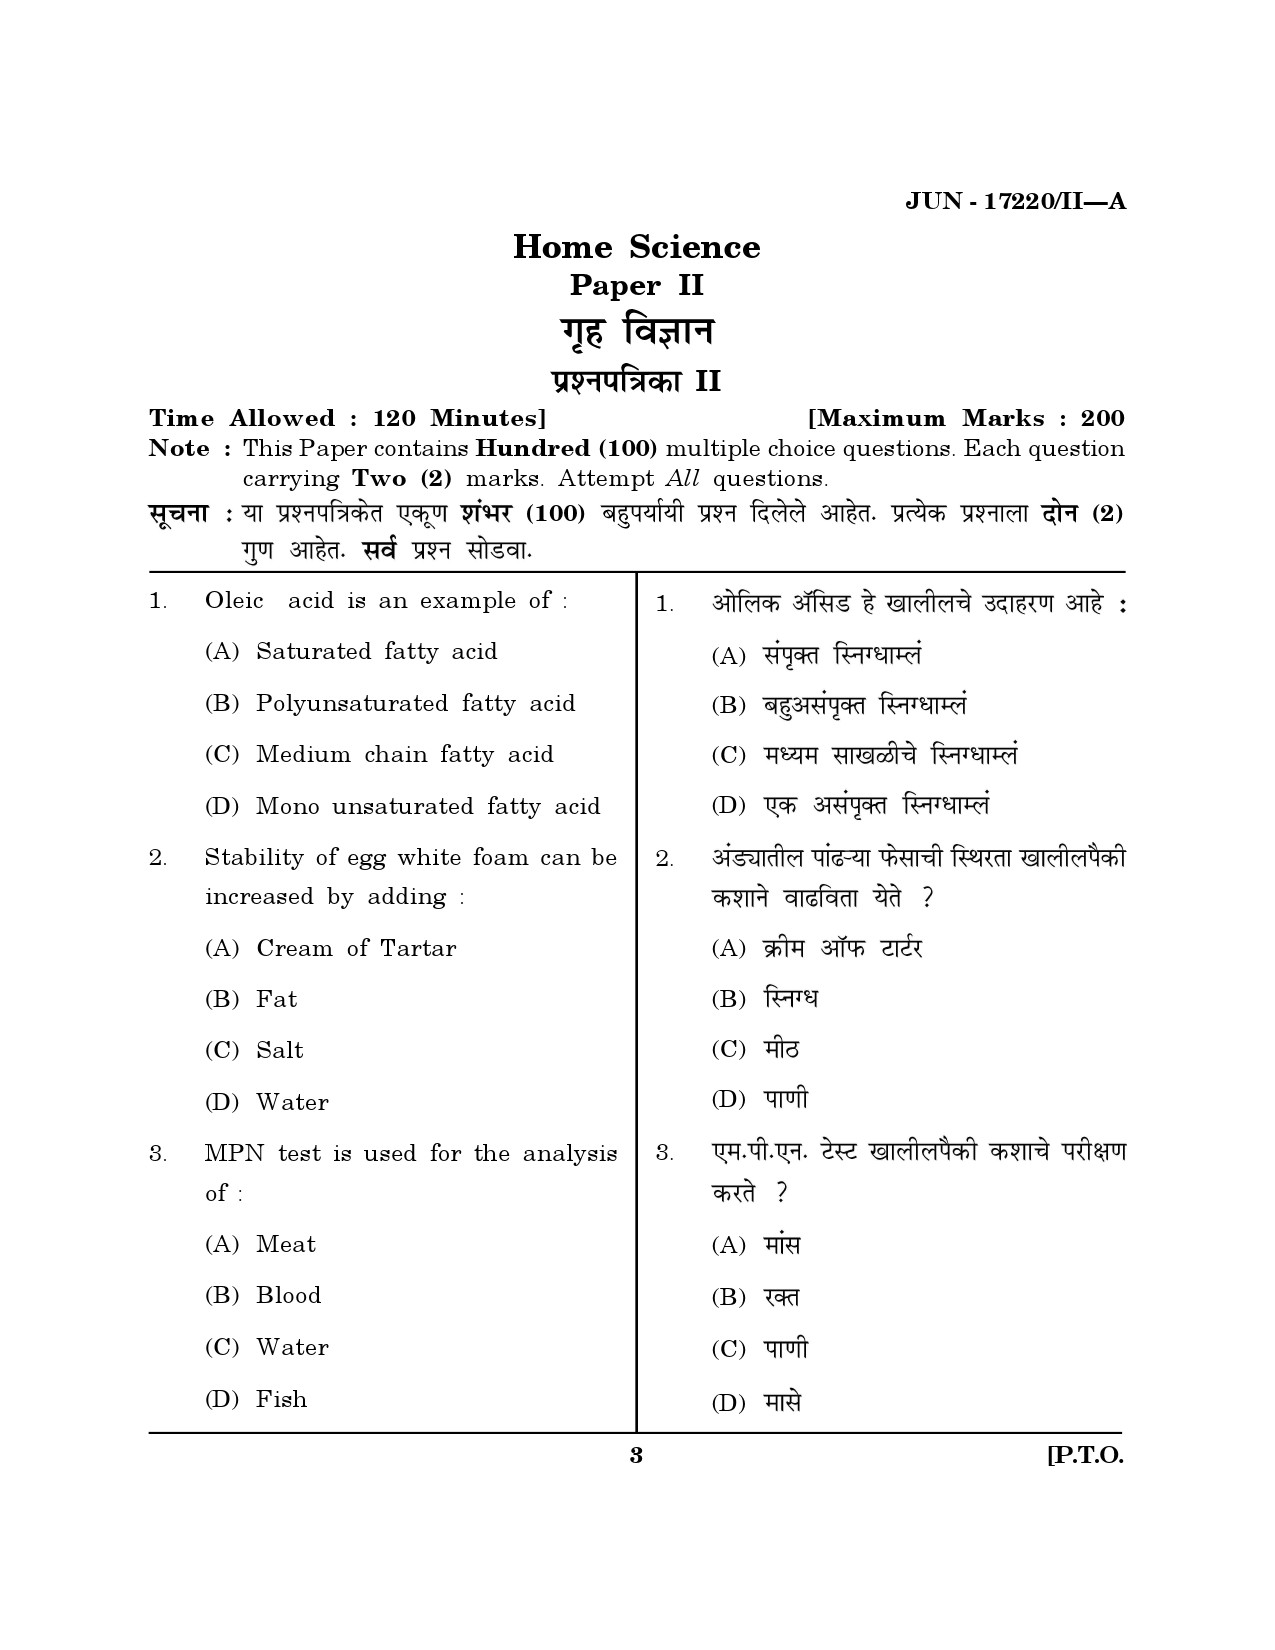 Maharashtra SET Home Science Question Paper II June 2020 2